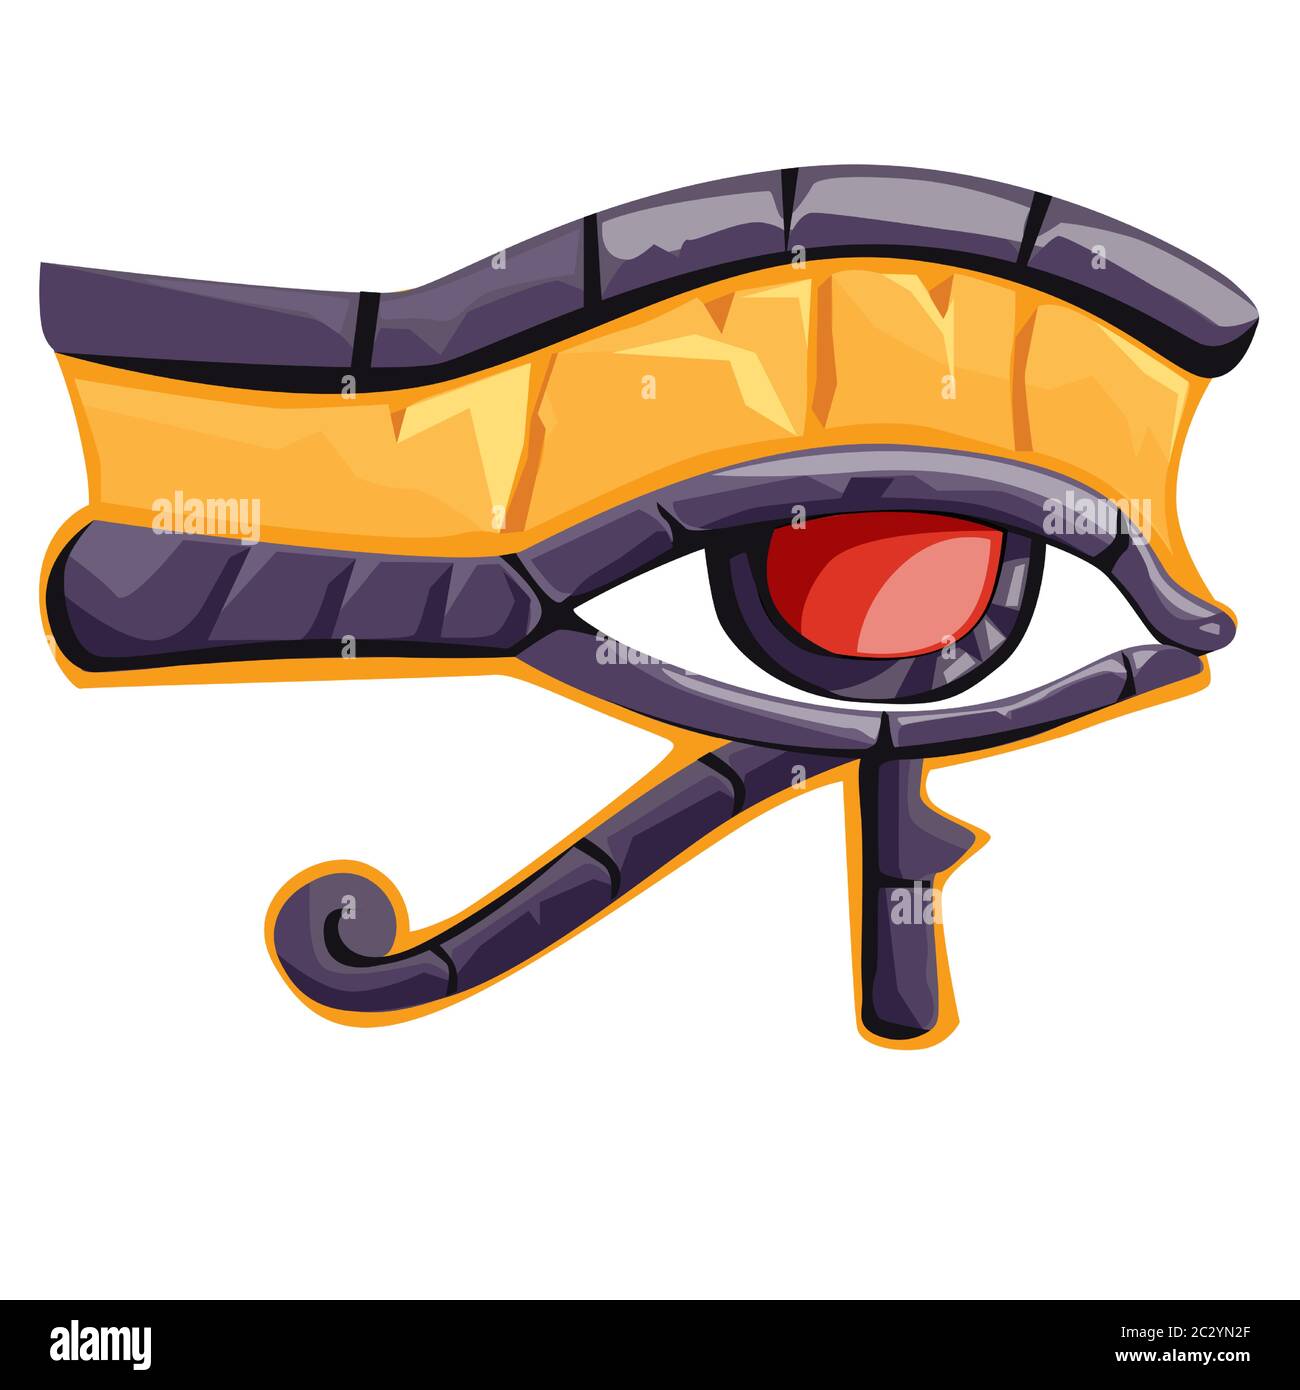 Auge des Horus oder Ra oder wadjet, alte ägyptische religiöse Symbol Cartoon Vektor-Illustration. Falcon Auge des sonnengottes, schützendes Amulett Symbol des Royalts Stock Vektor